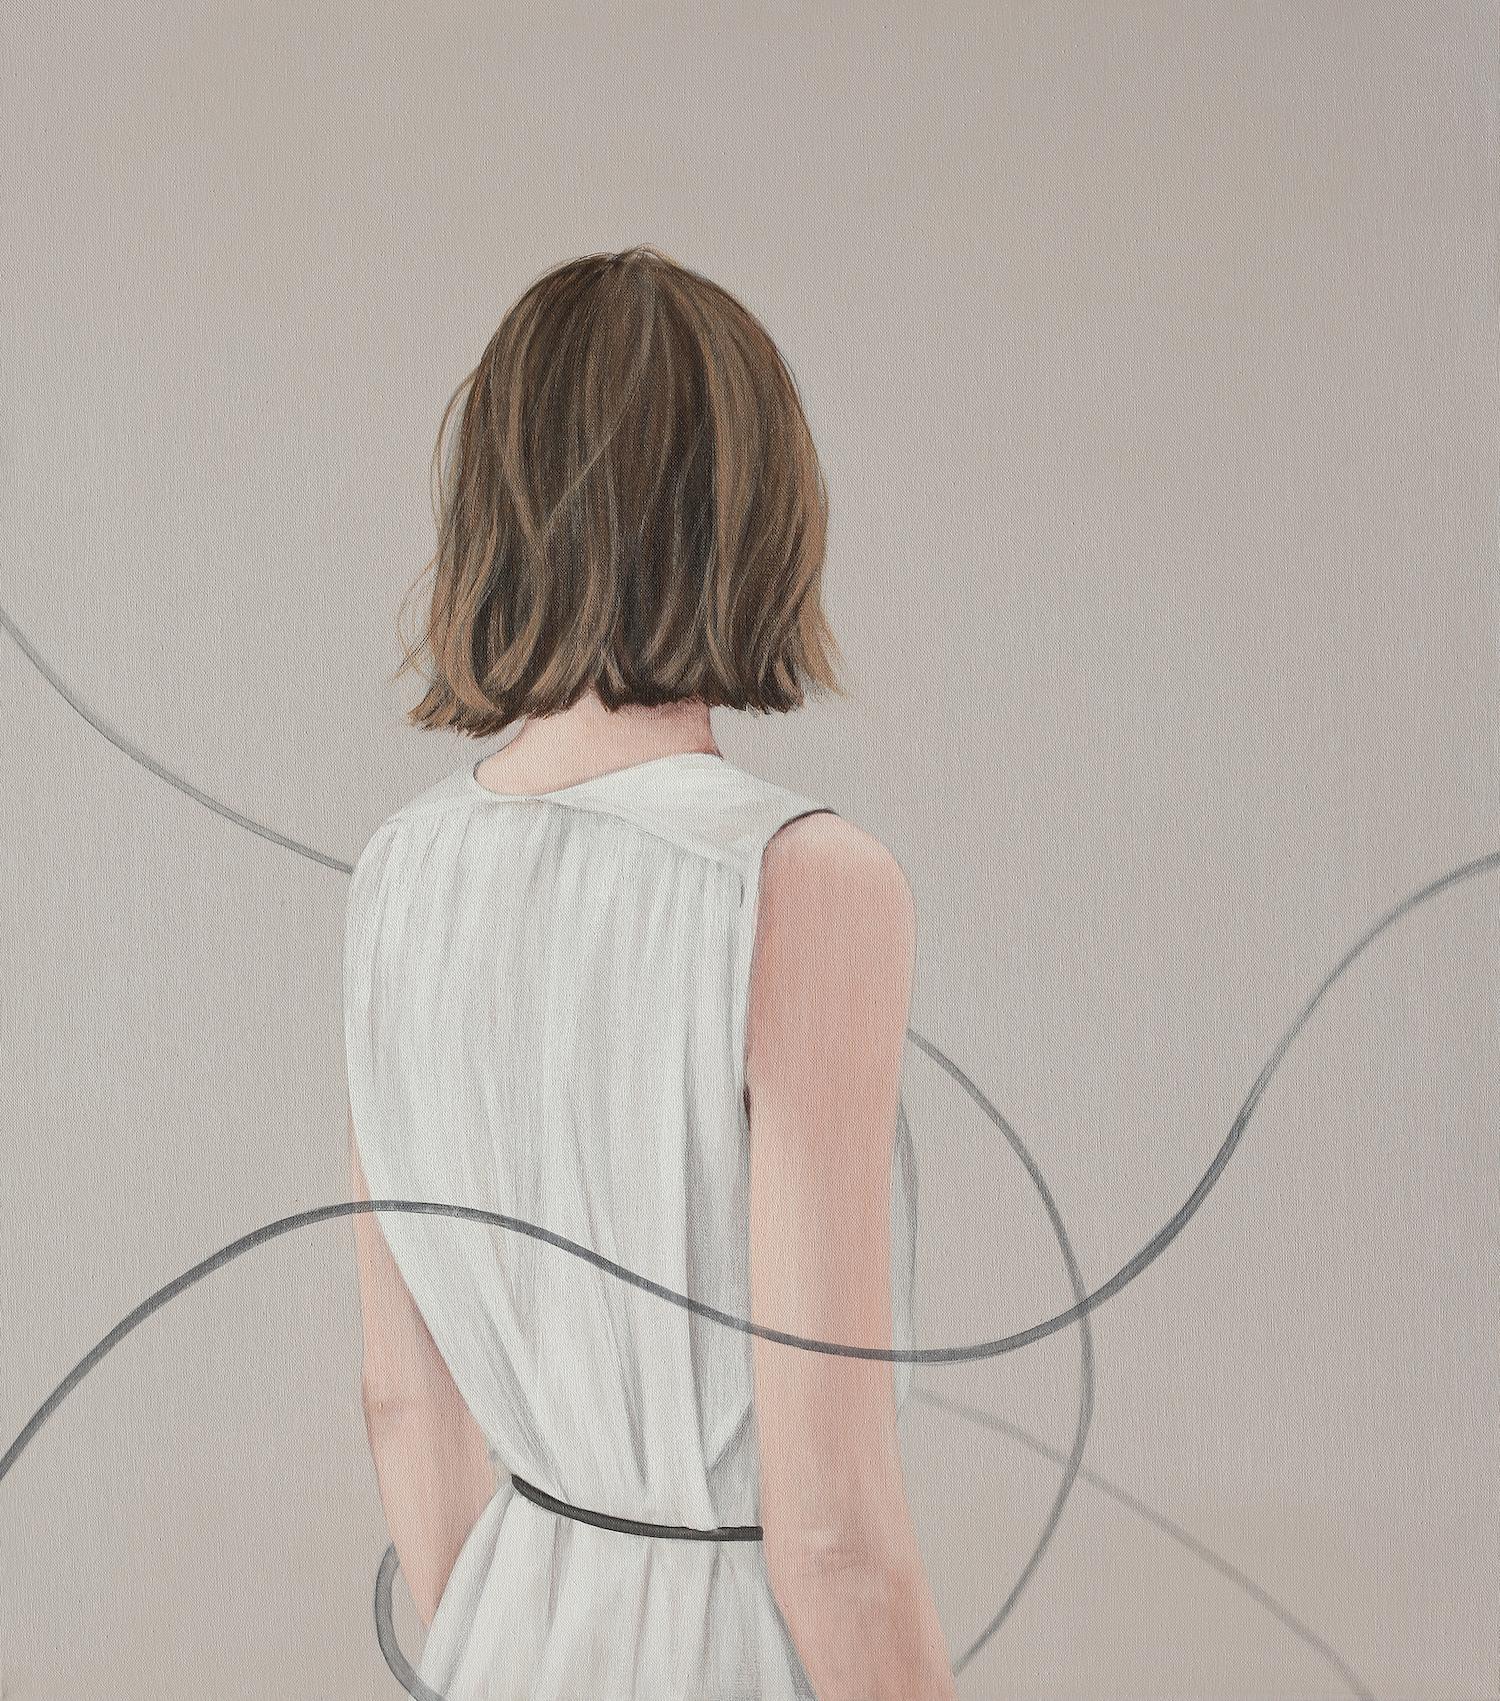 « It is Just the Beginning » - Portrait contemporain d'une fille en robe blanche